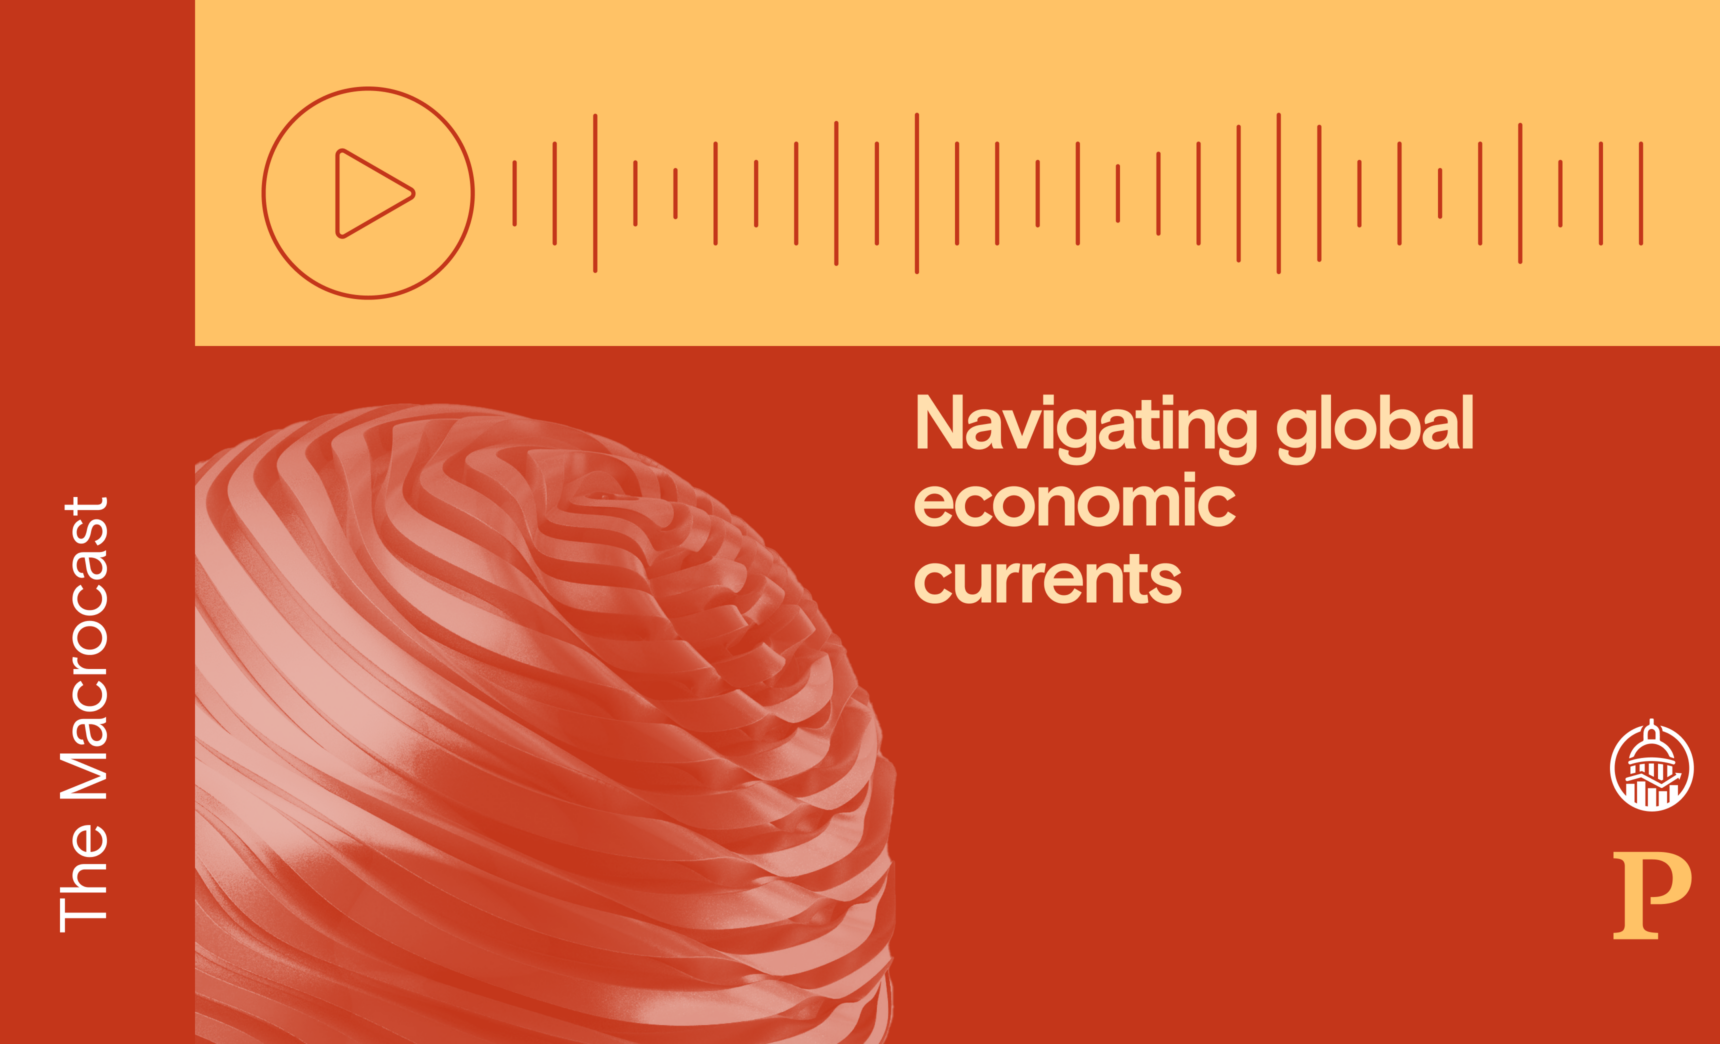 Macrocast: Navigating global economic currents